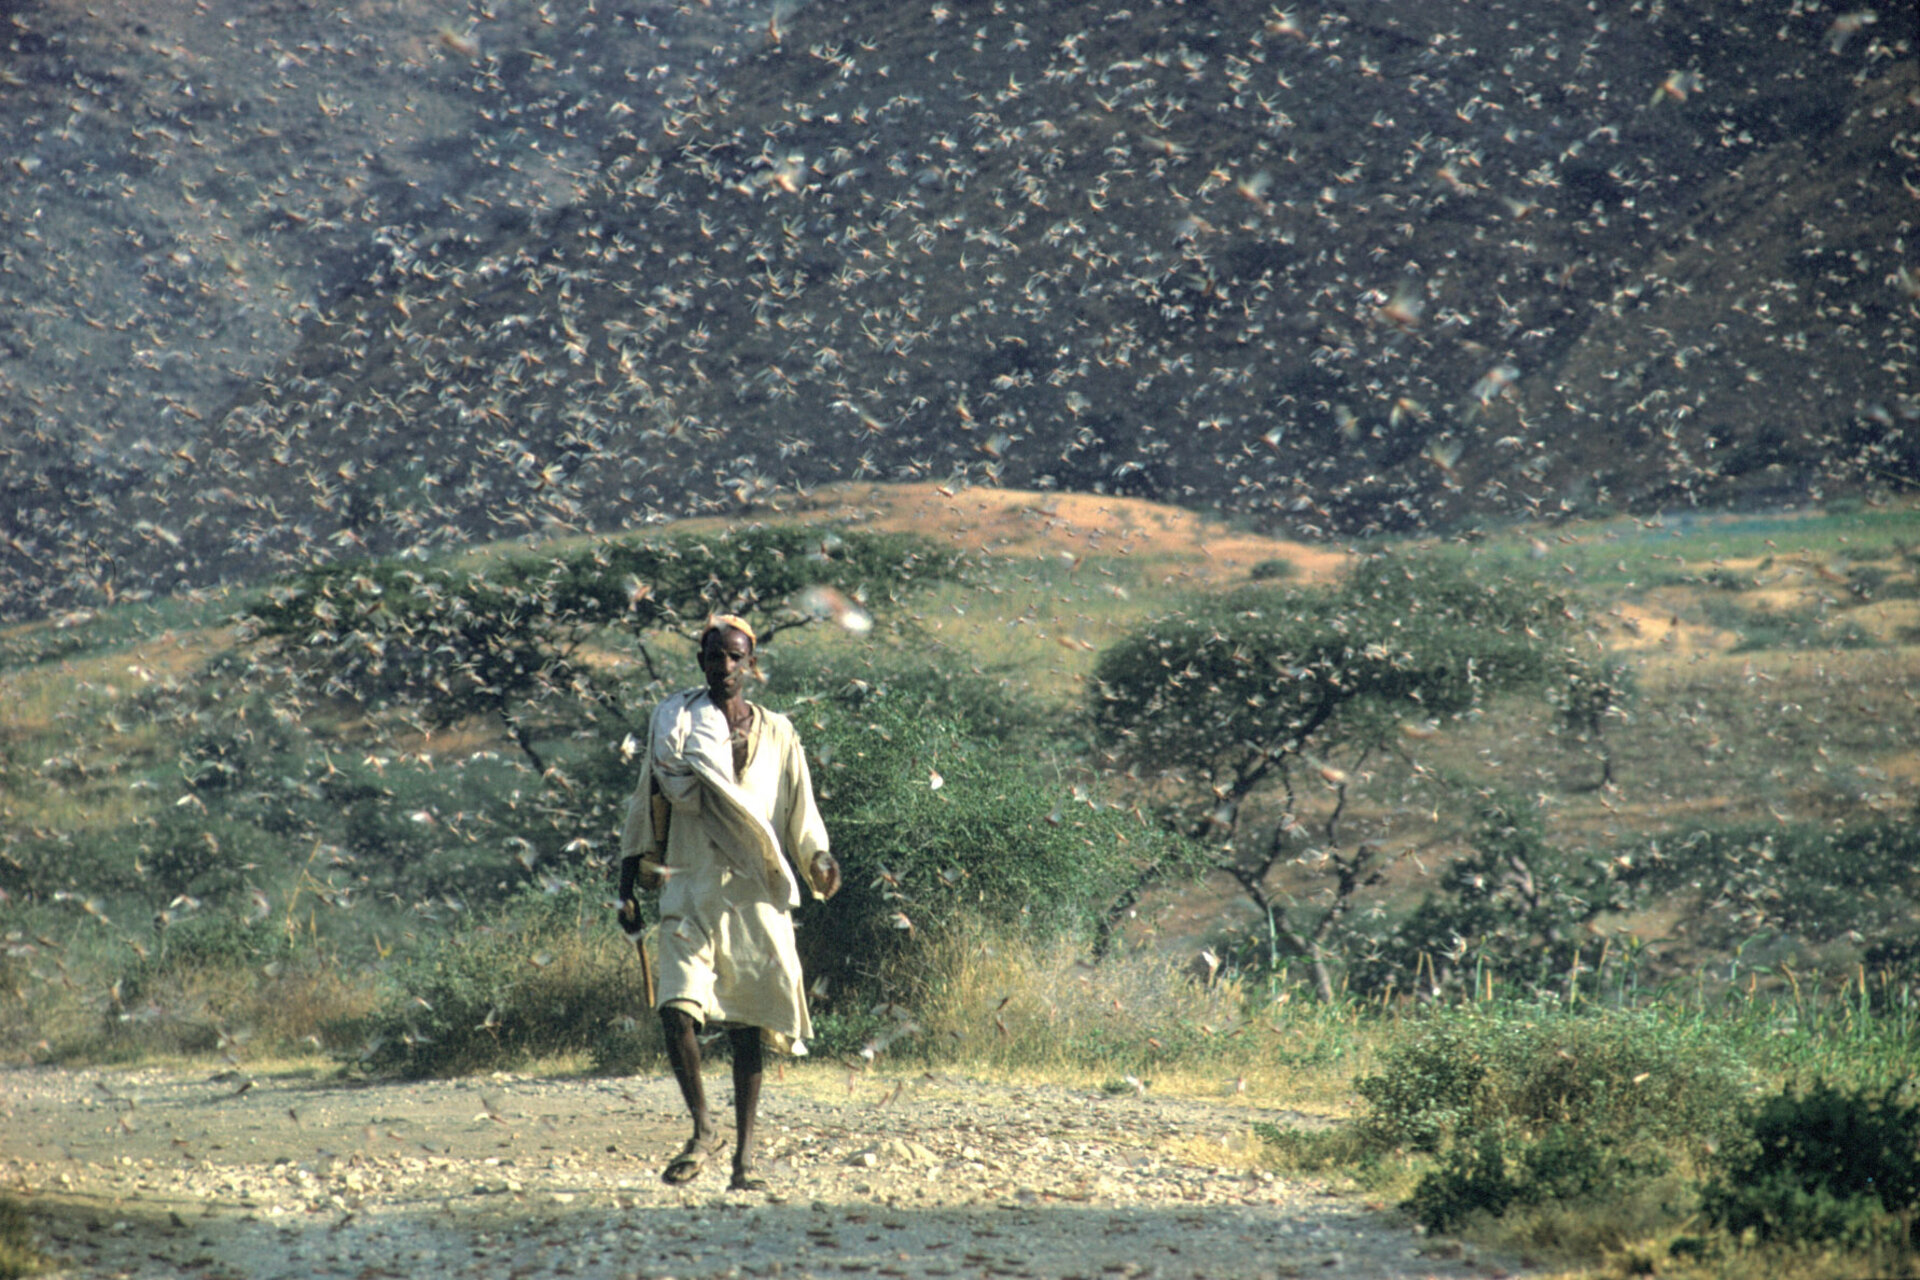 Desert locust outbreak